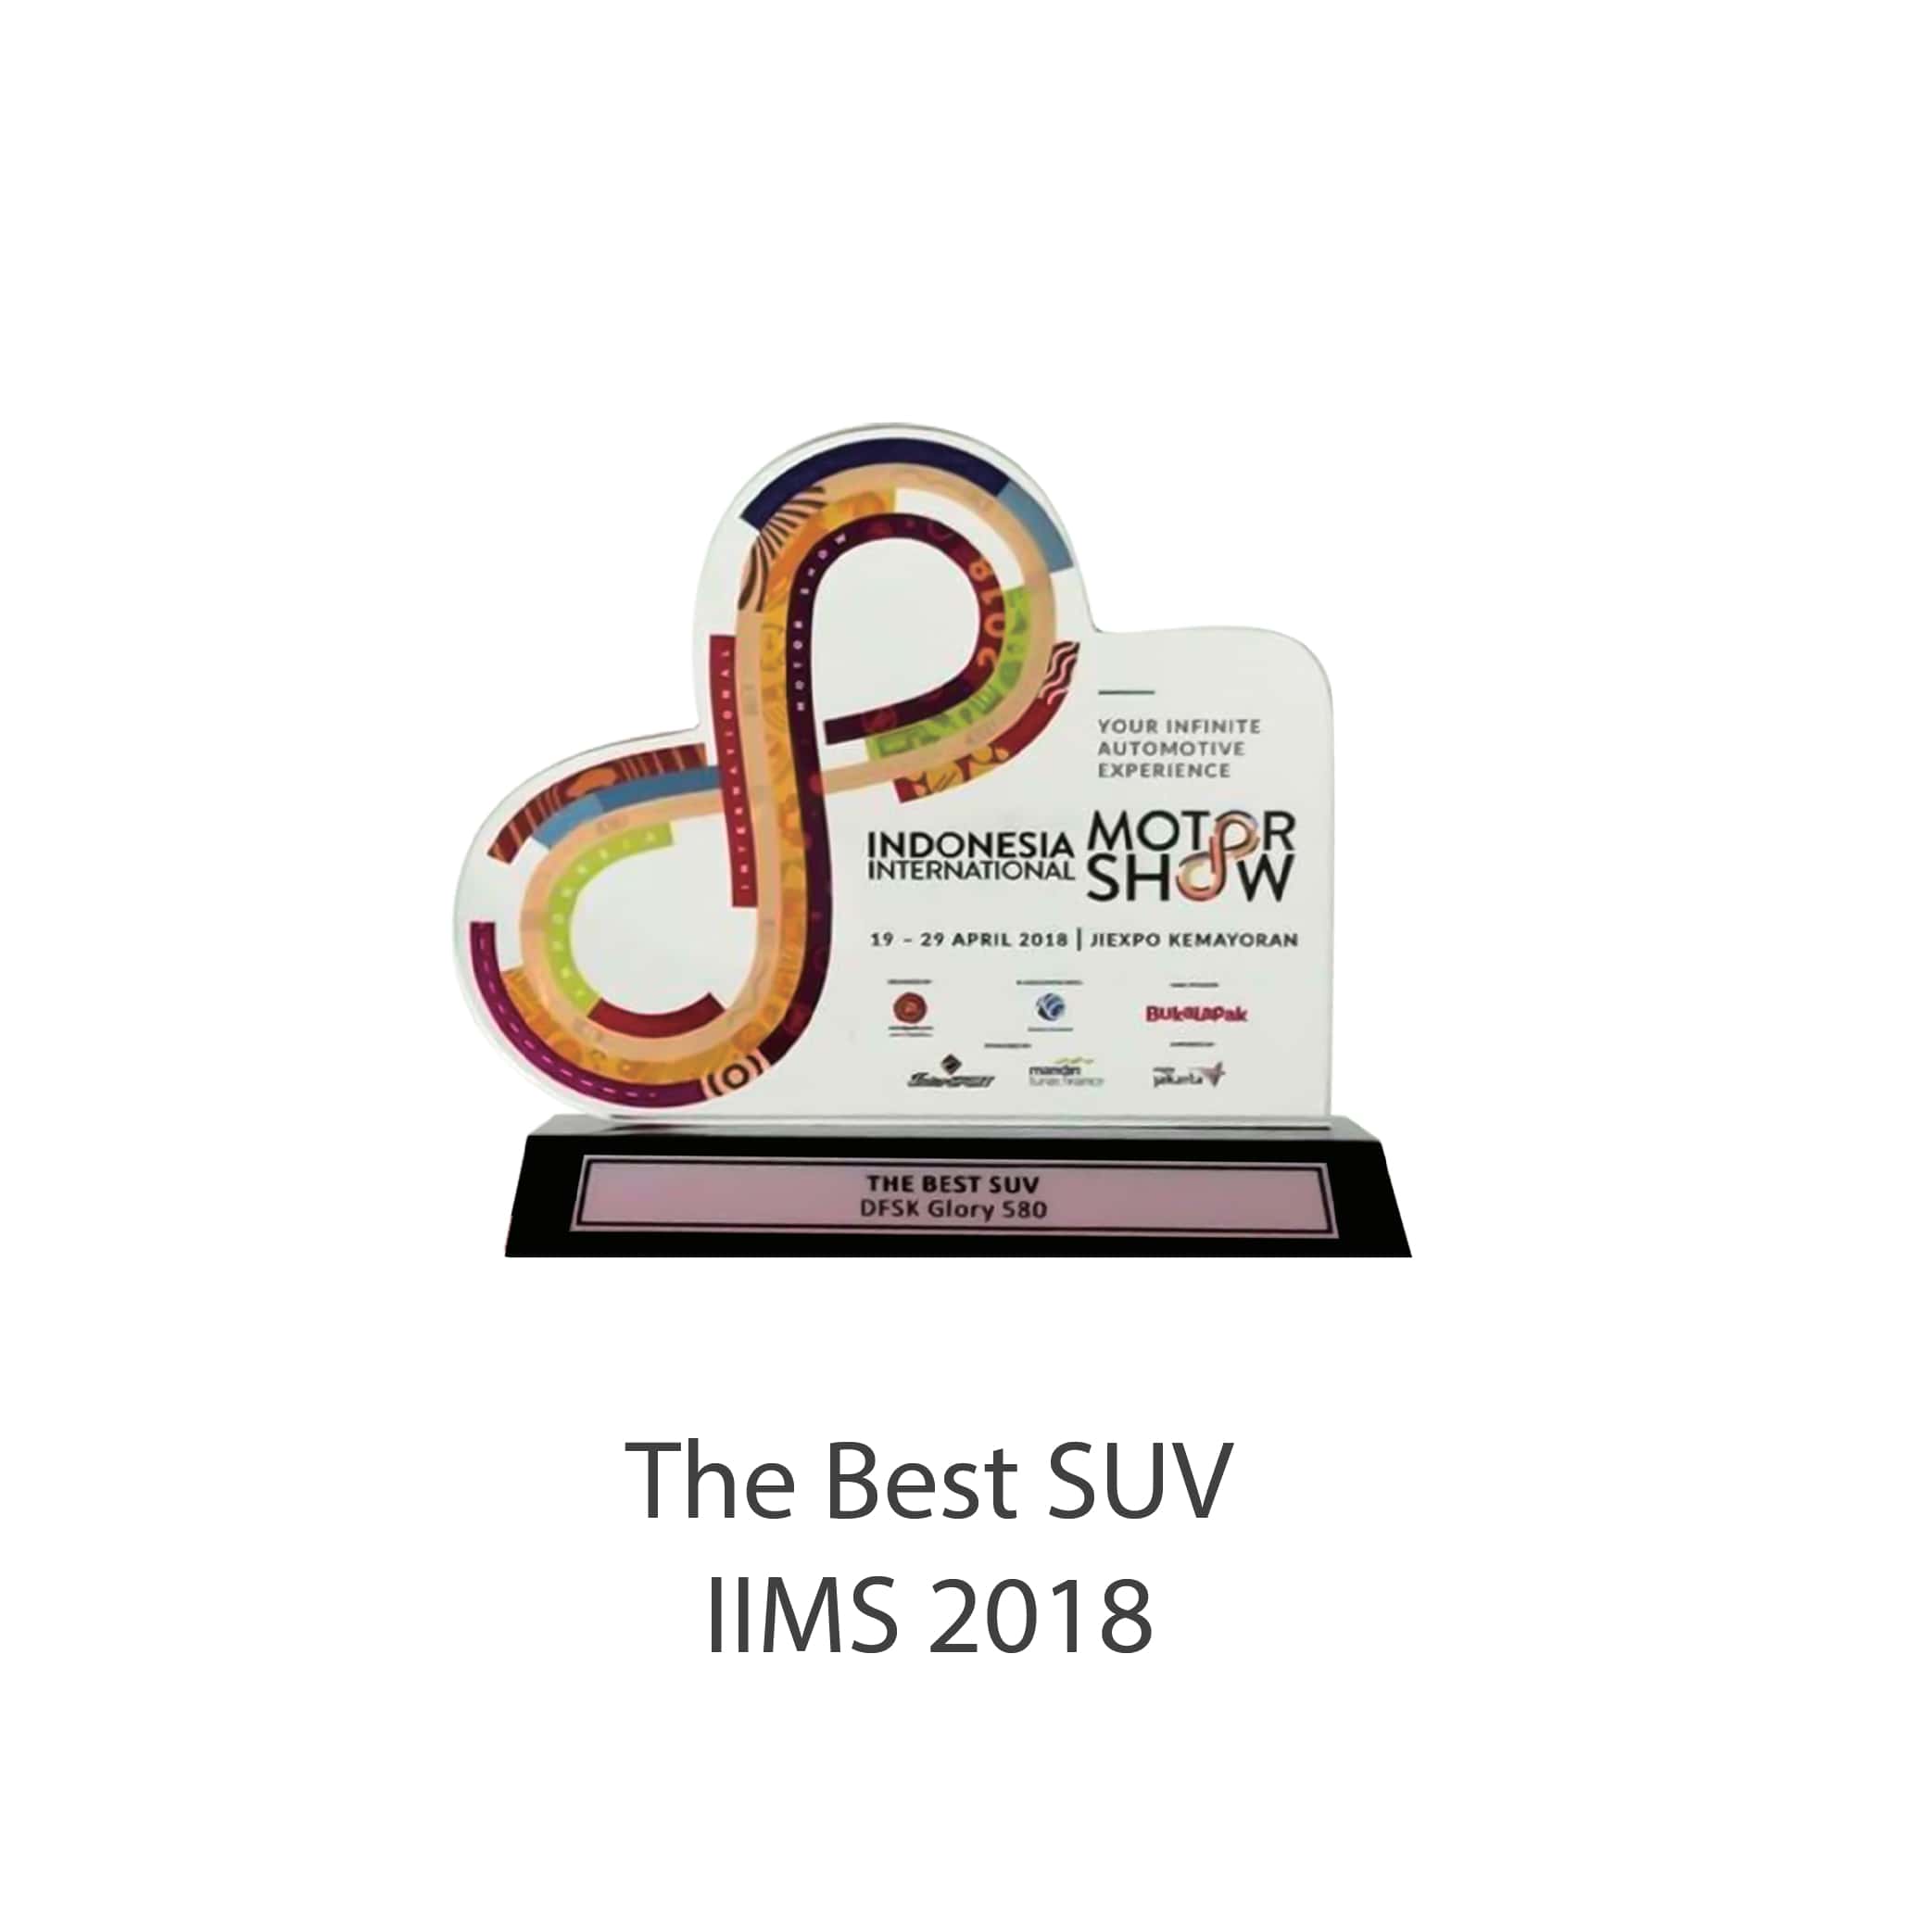 IIMS 2018 The Best SUV - DFSK GLORY 580 